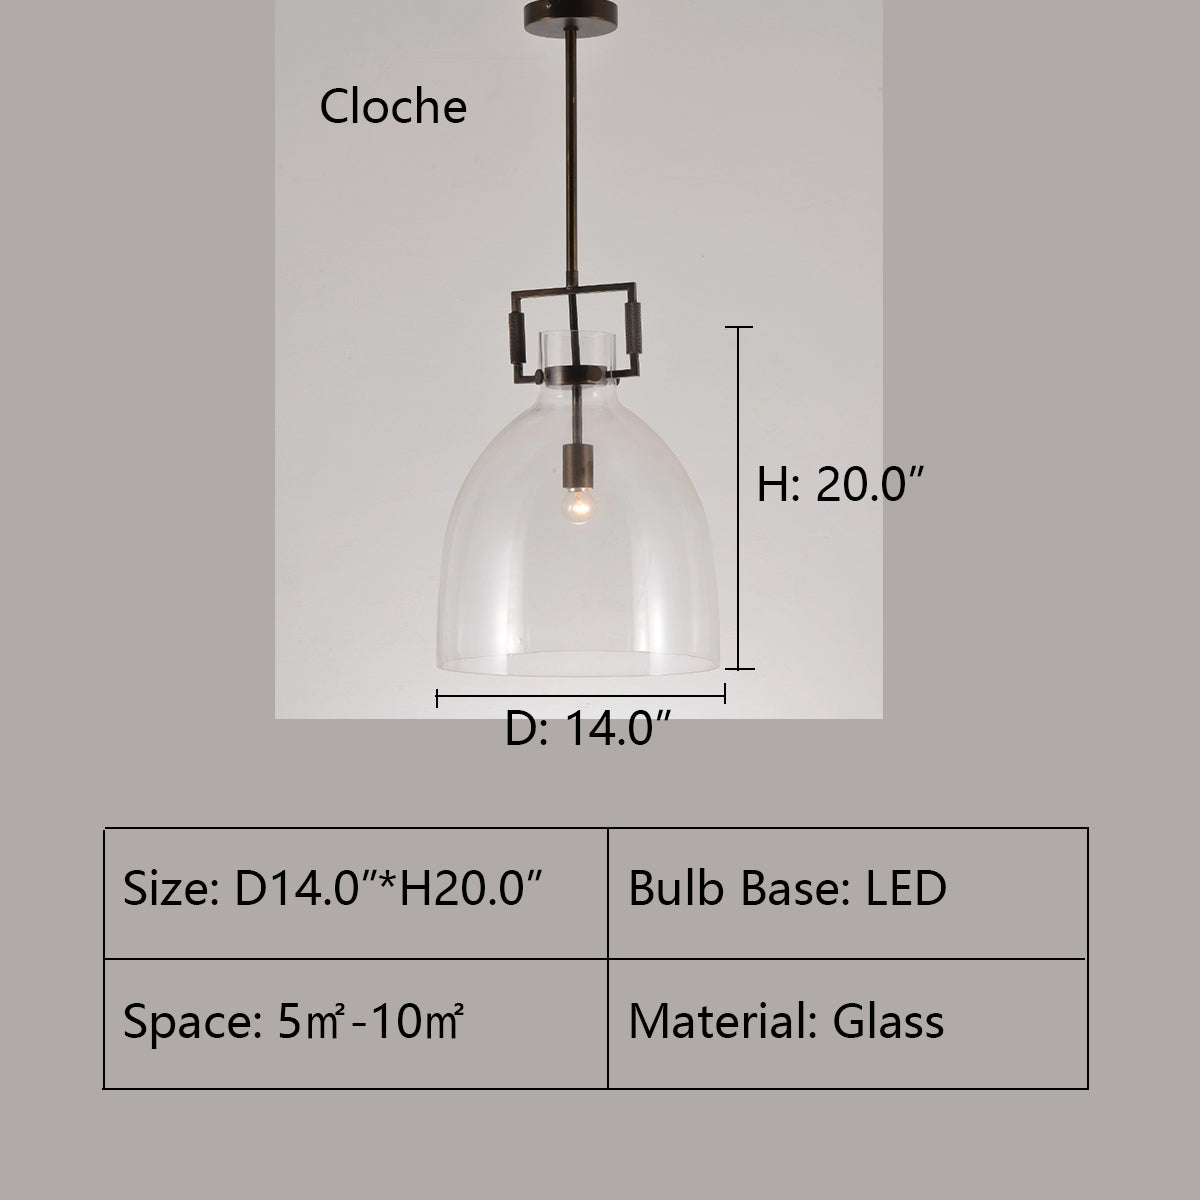 Cloche: D14.0"*H20.0" MODULE GLASS PENDANT LIGHT,pendant,glass,black iron,metal,ceiling,kitchen island,bar,dining table,long table,dining bar,kitchen bar,island,modern light,glass light